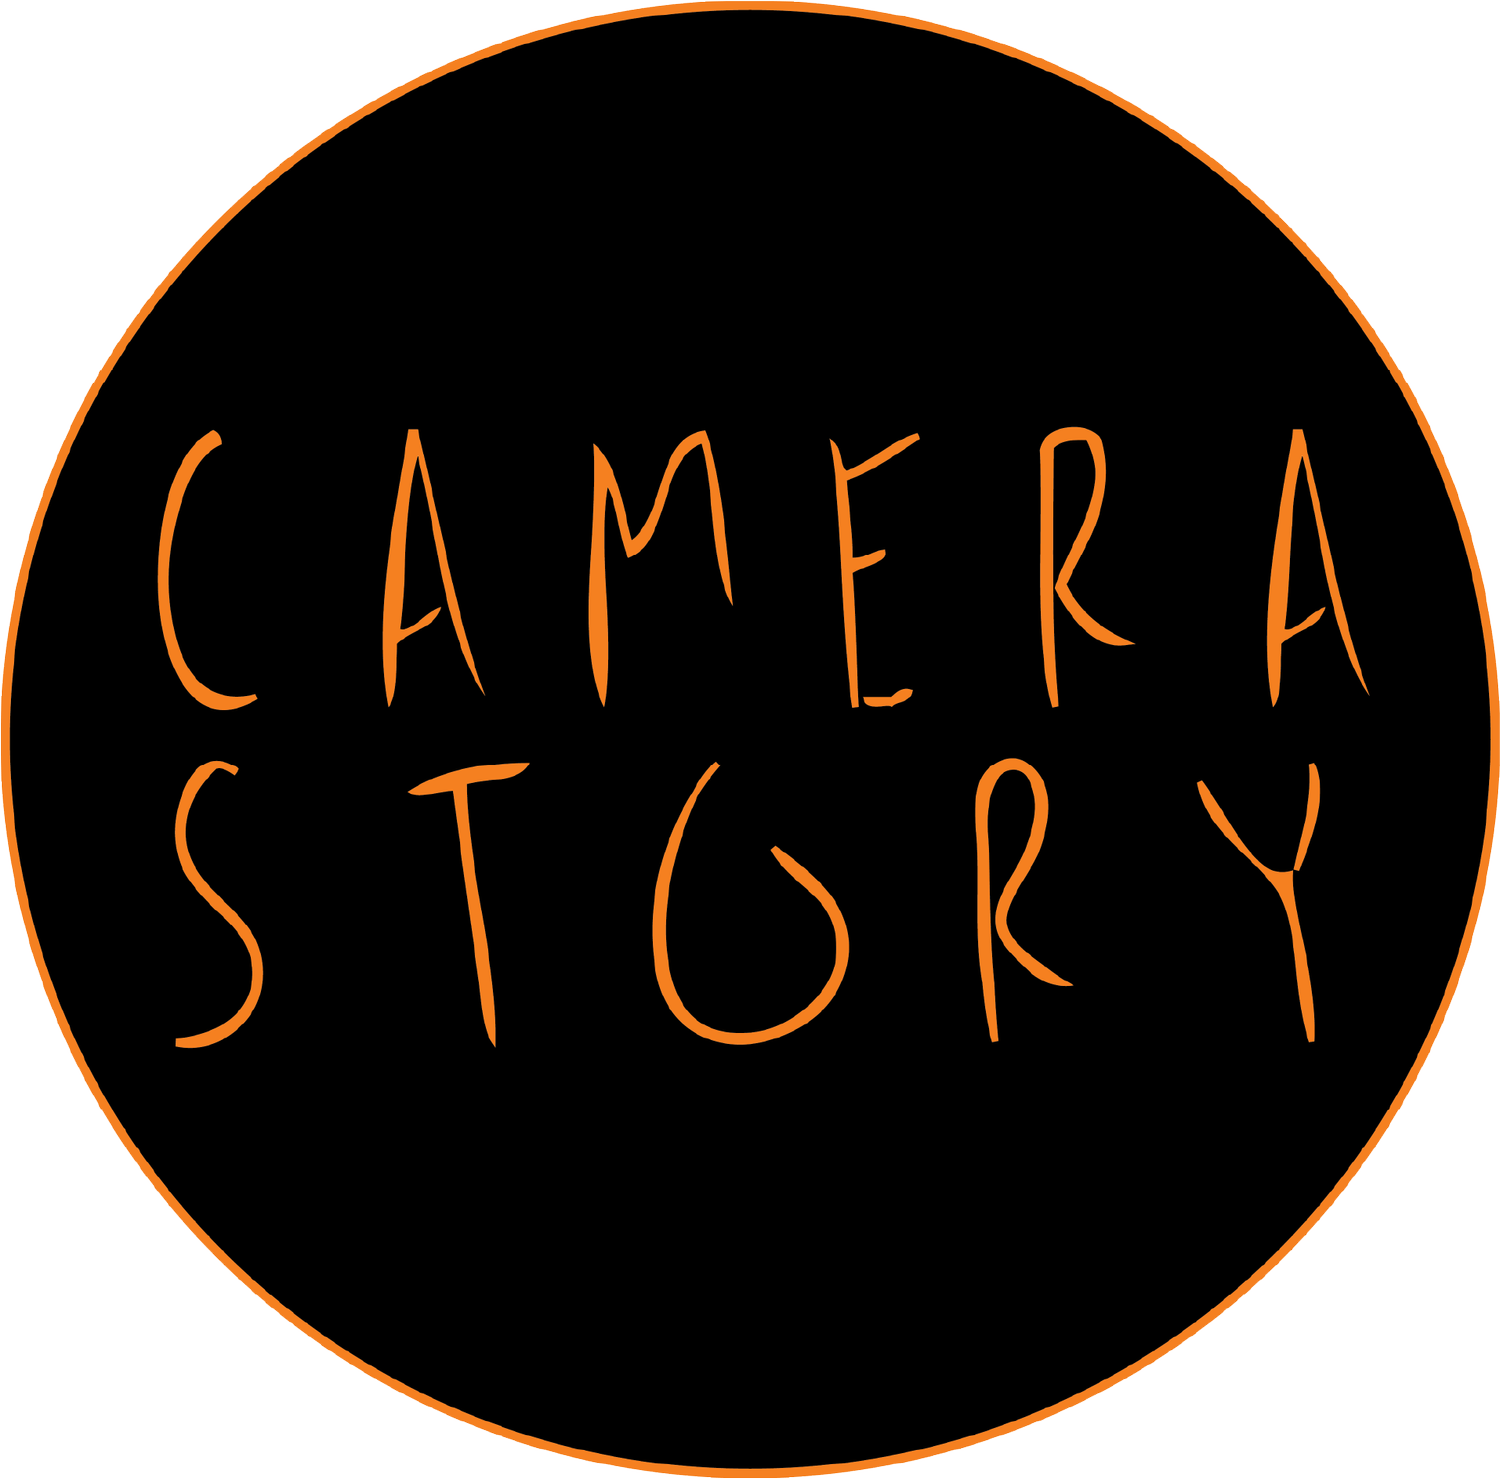 Camera Story